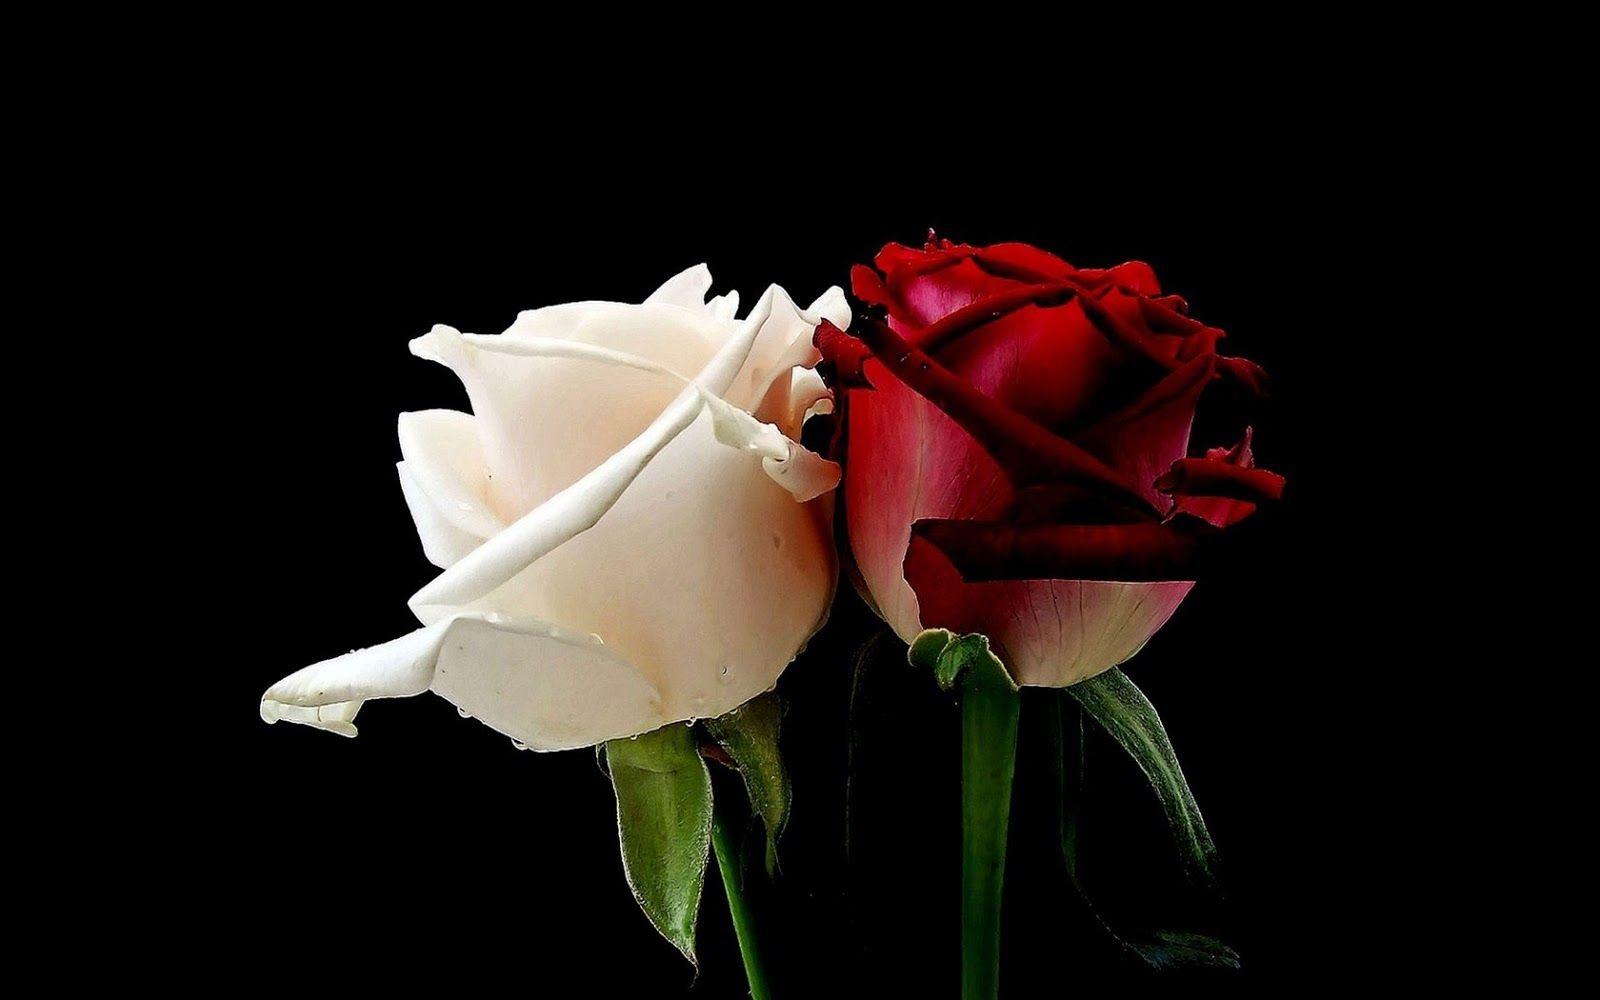 knumathise: Red And White Rose Wallpaper Image